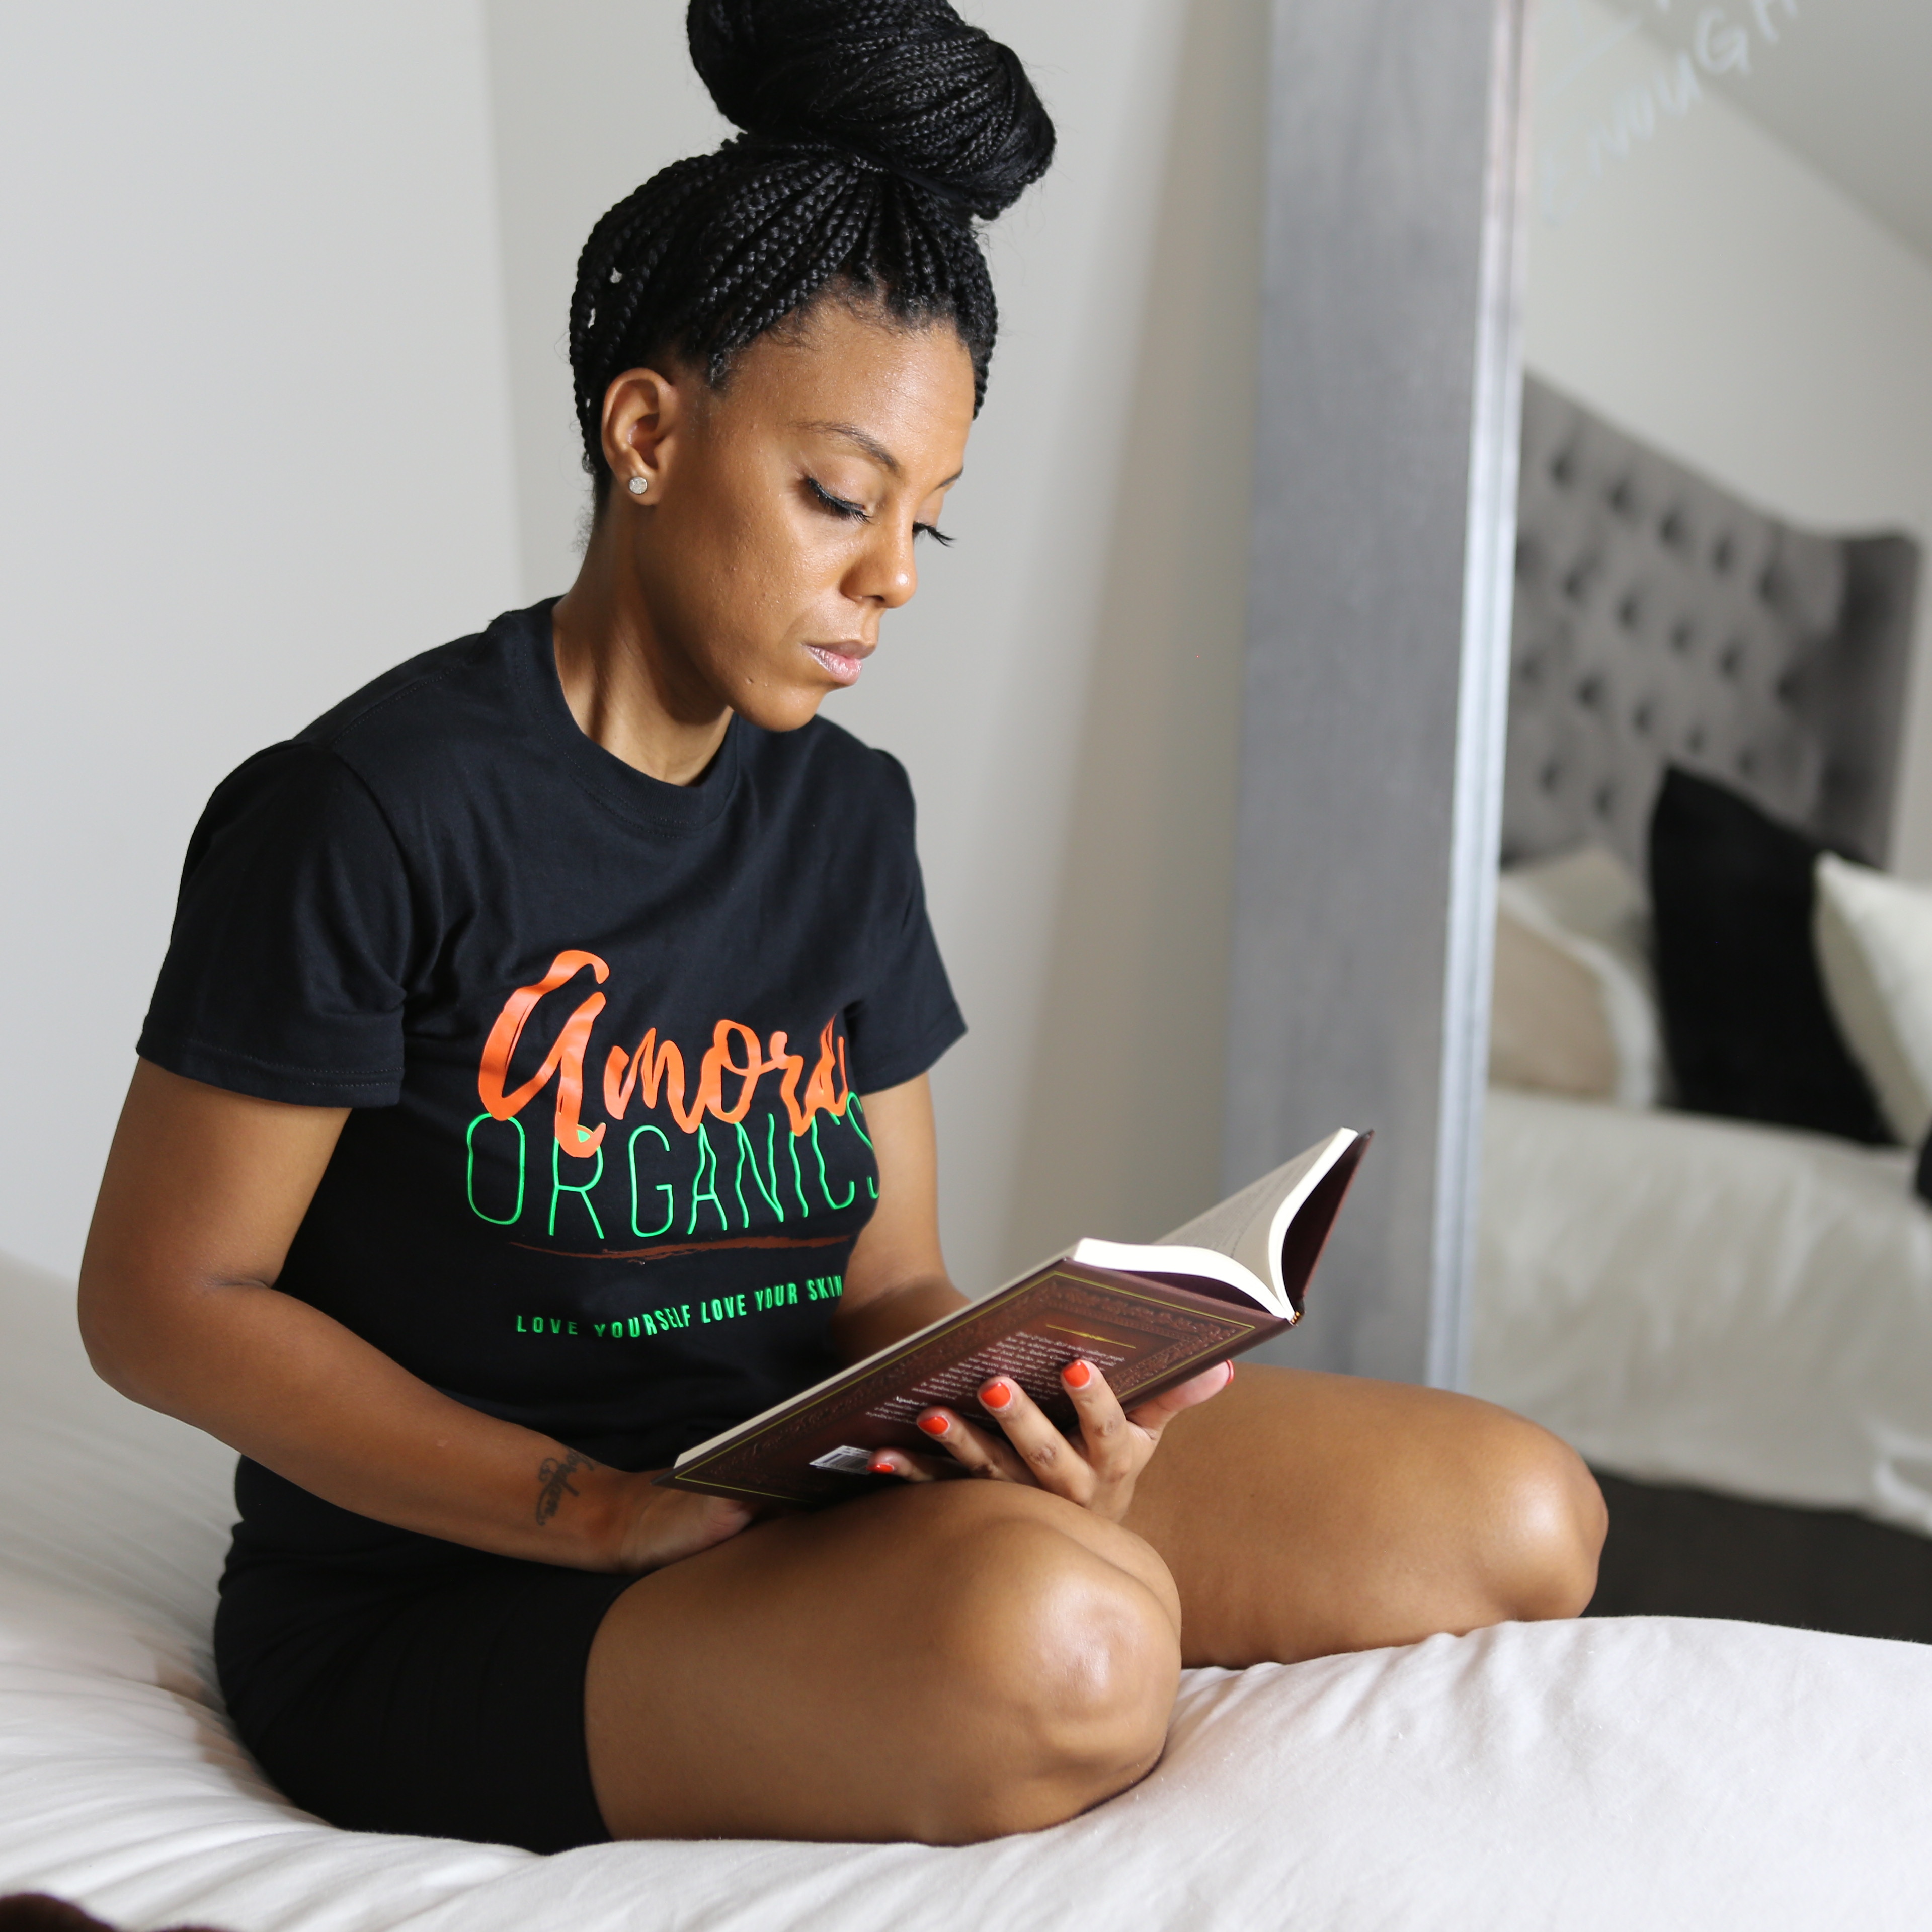 Black woman reading a book